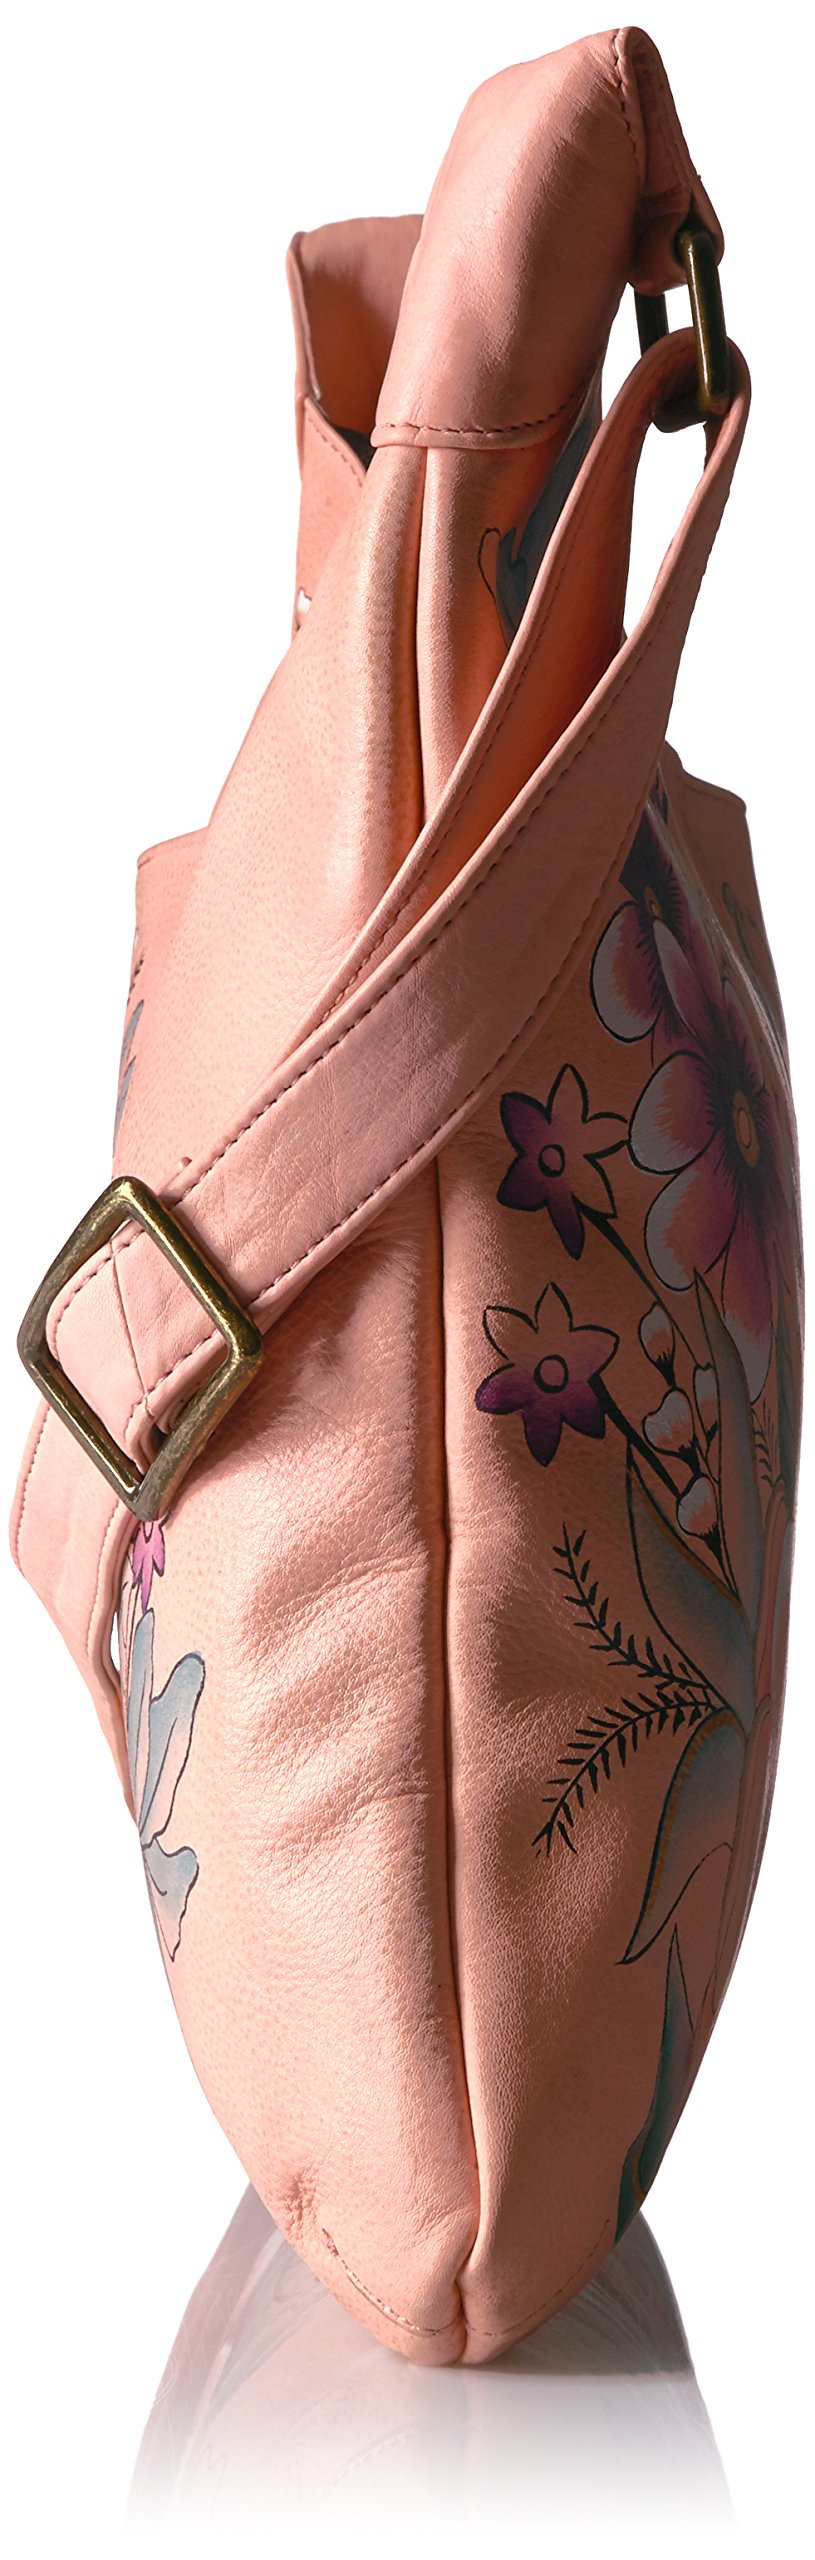 Anna by Anuschka Women's V Top Multi-compartment Crossbody Cross Body Handbag, Vintage Garden, One Size US